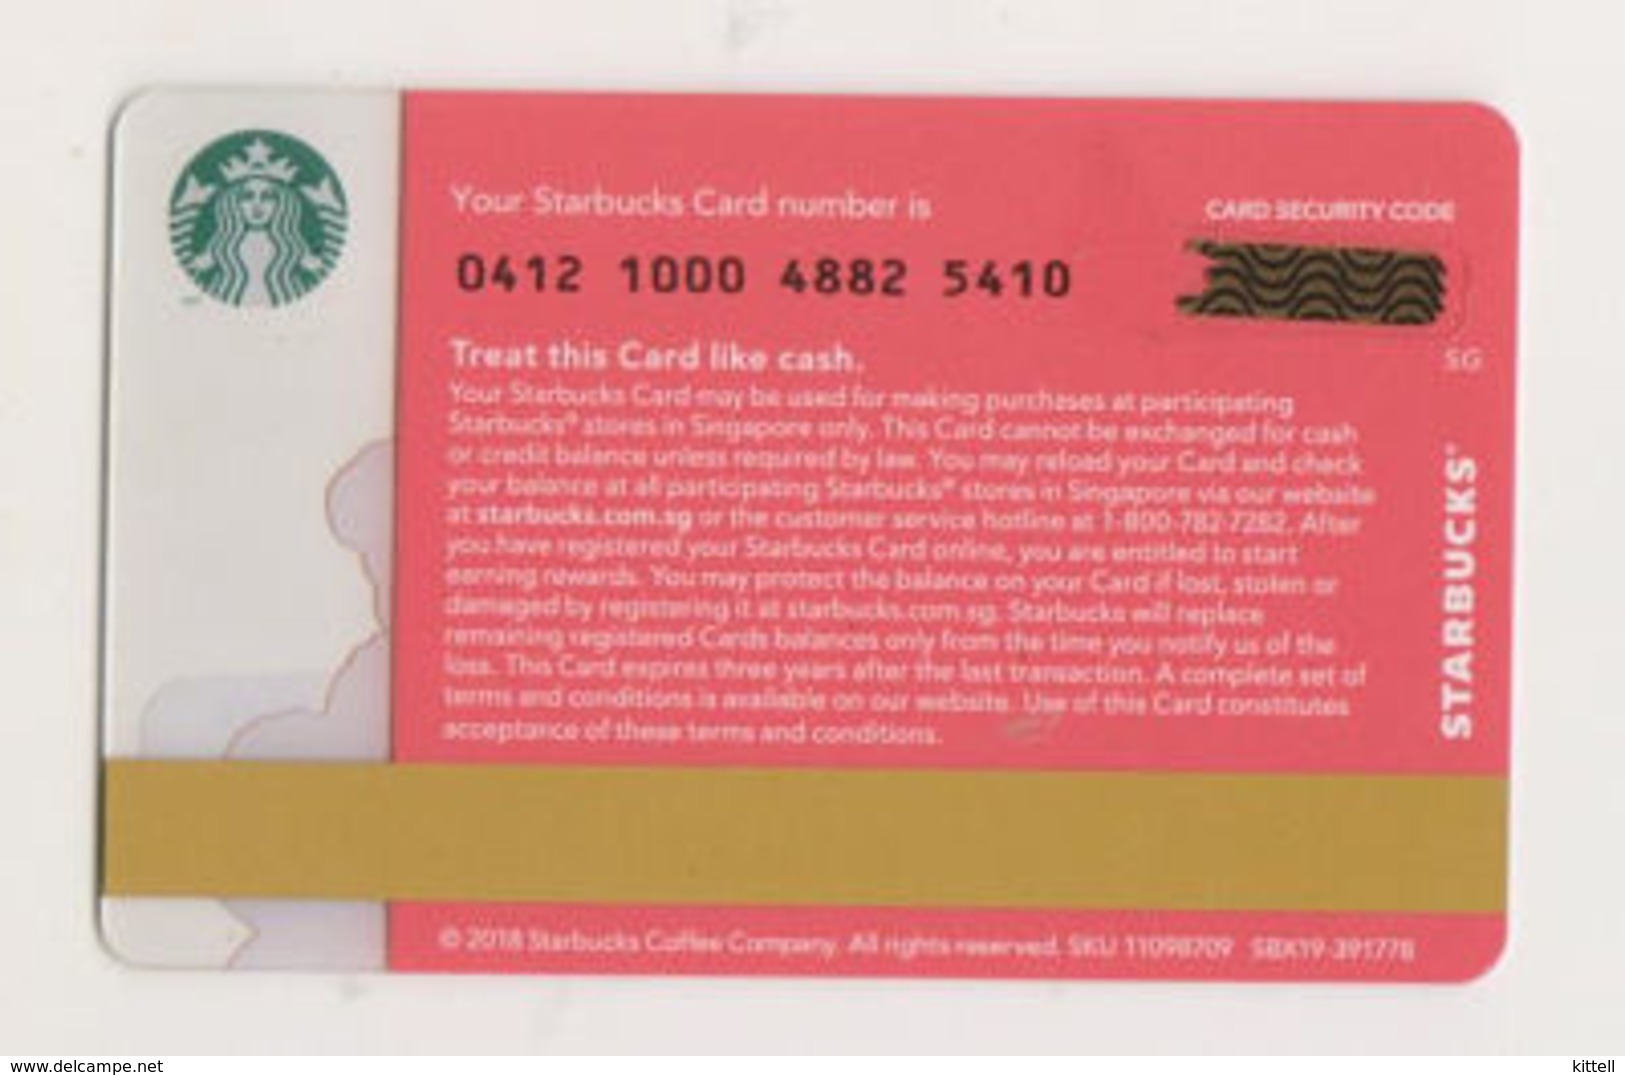 Starbucks Card Singapore Year Of Pig 2019 Unused - Cartes Cadeaux